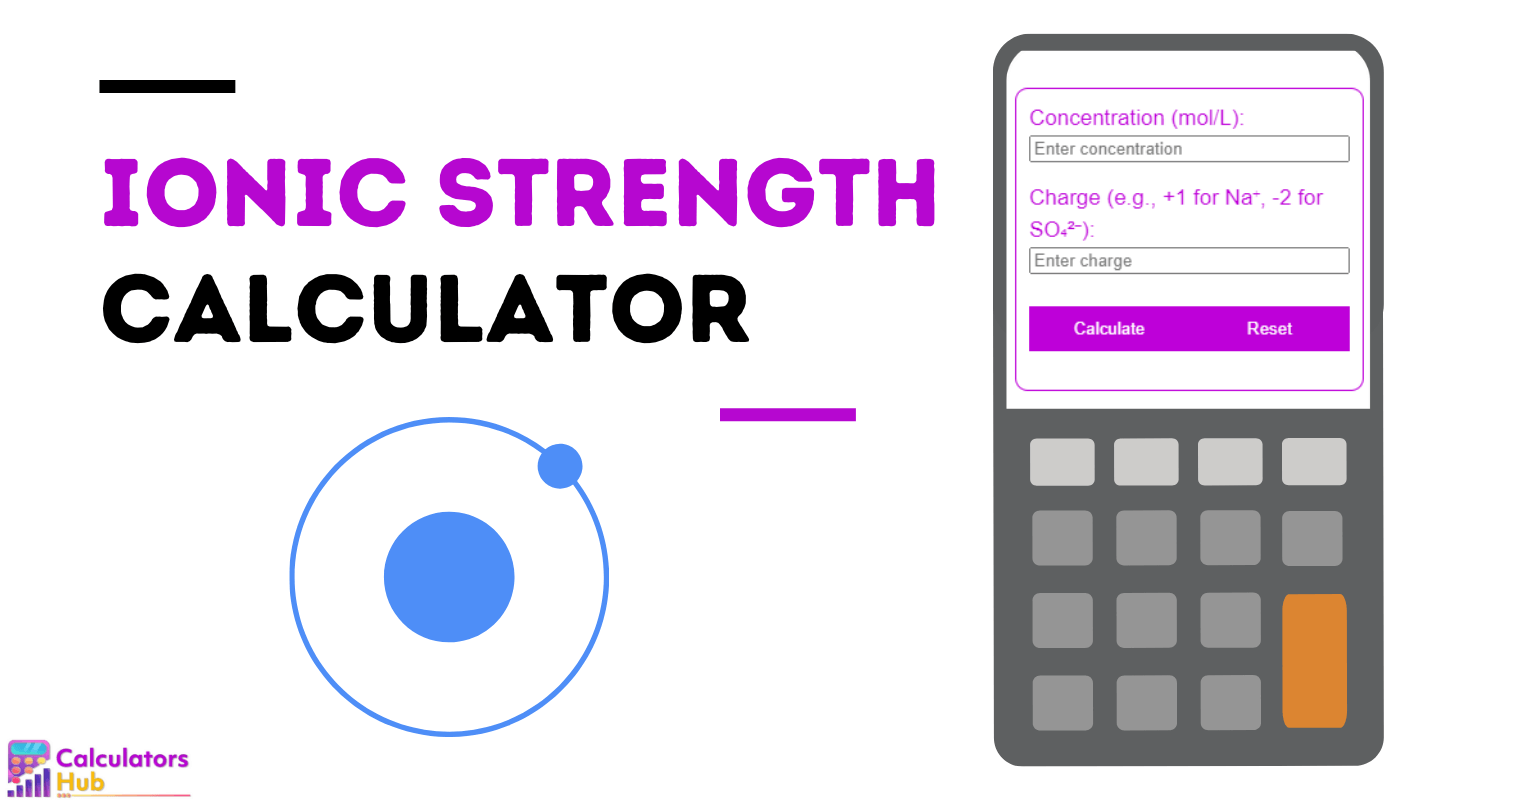 Ionic Strength Calculator